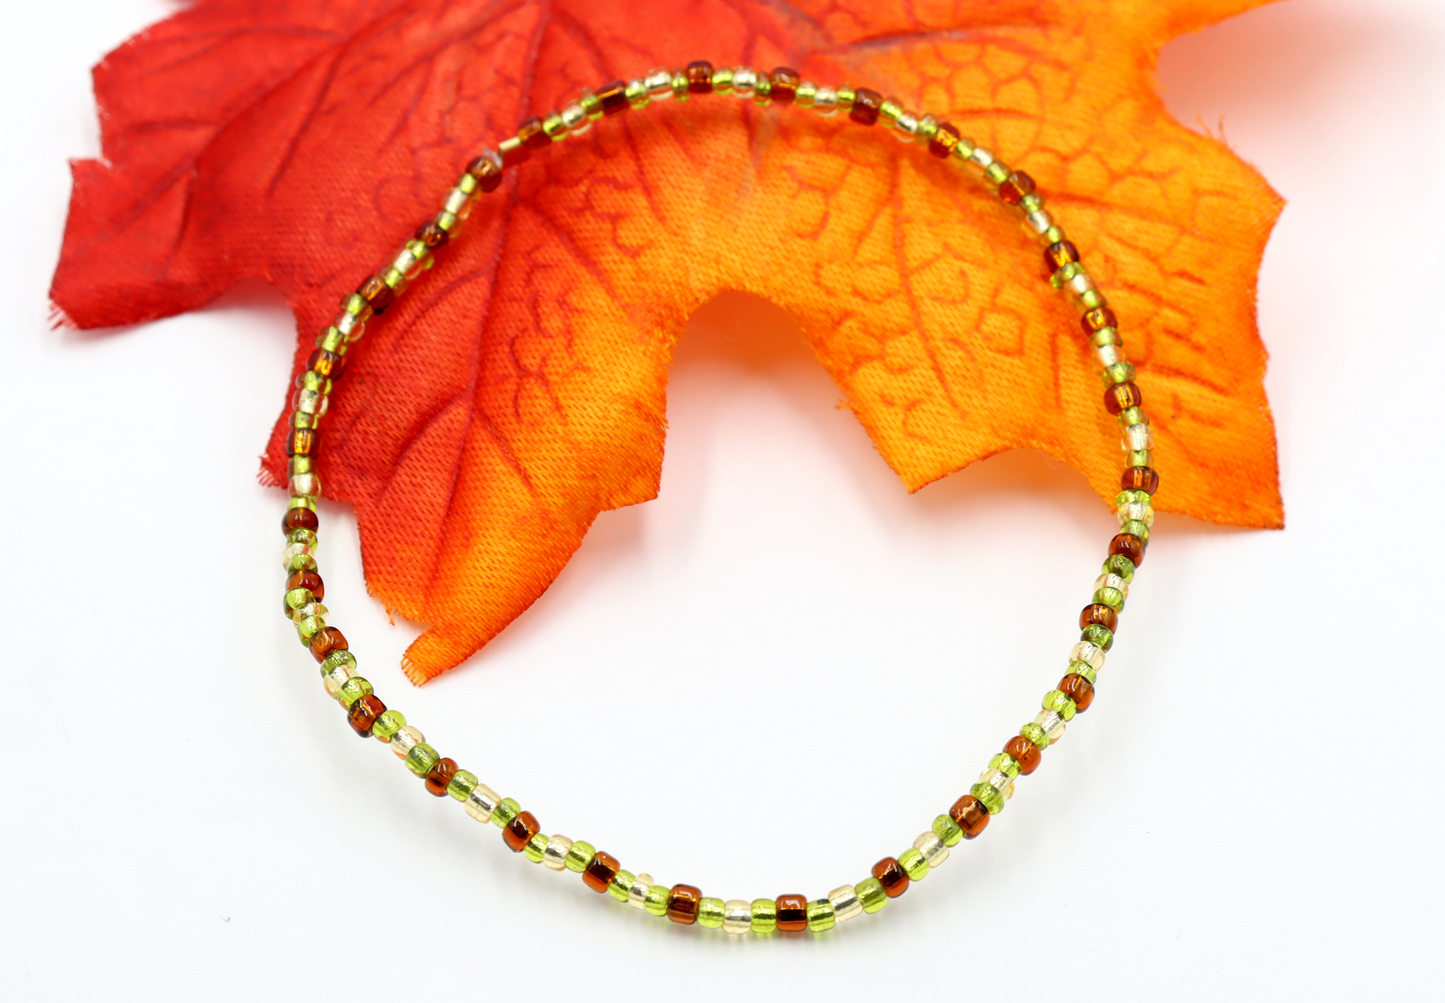 Harvest Pear - An Autumn Delight Women's Glass Bead Stretch Bracelet by Monkey's Mojo